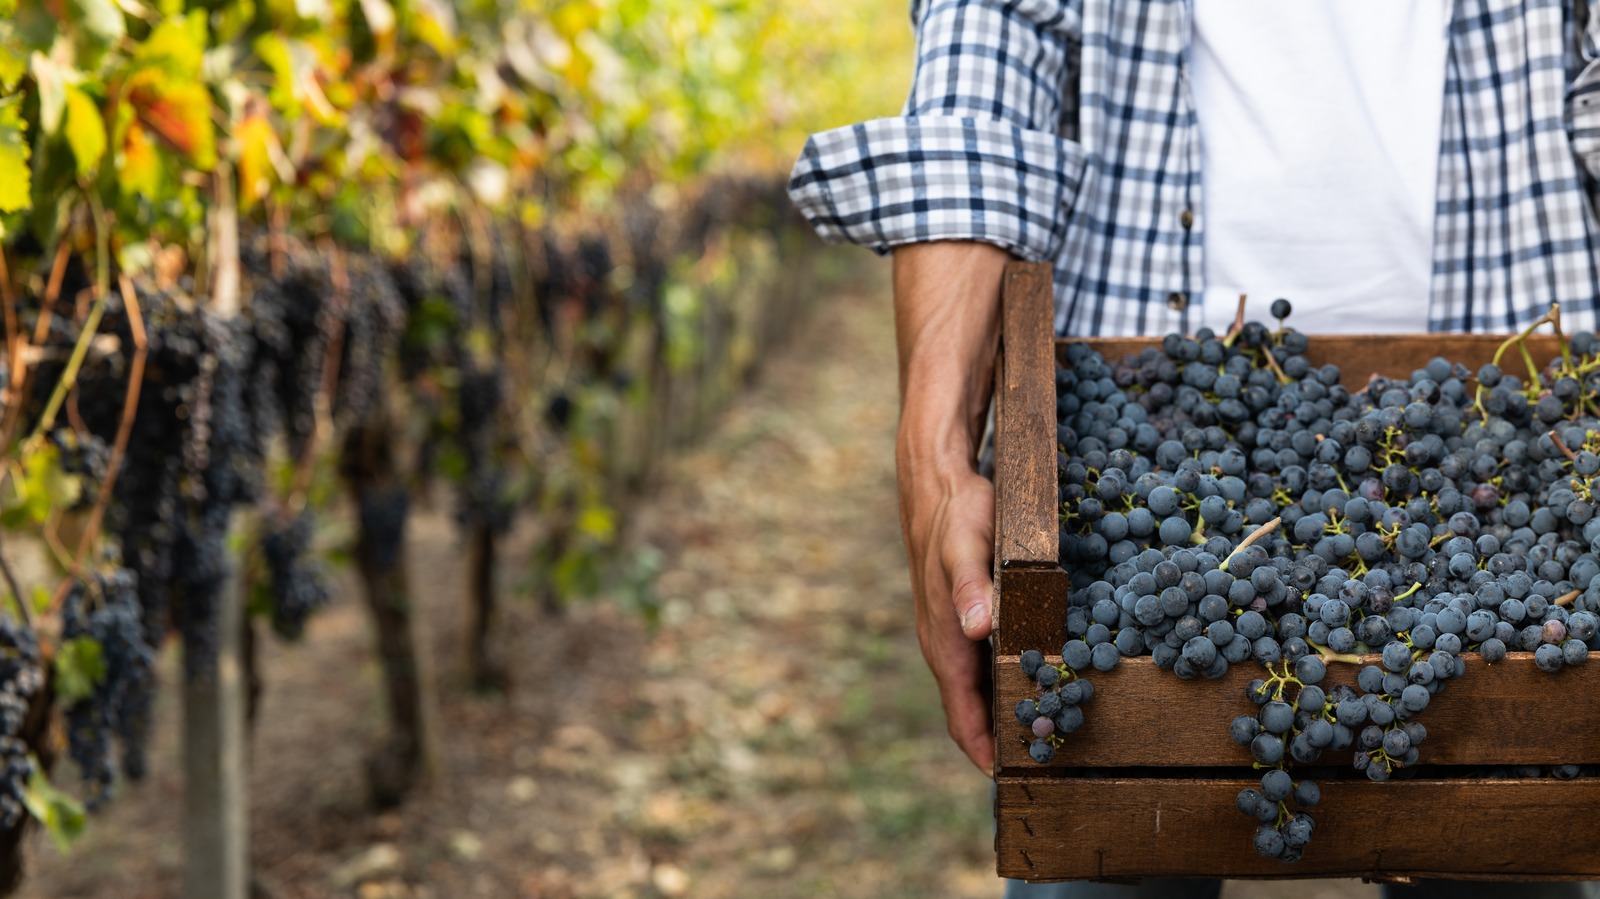 Italian Wines vs. California Wines - What Makes Them Different?